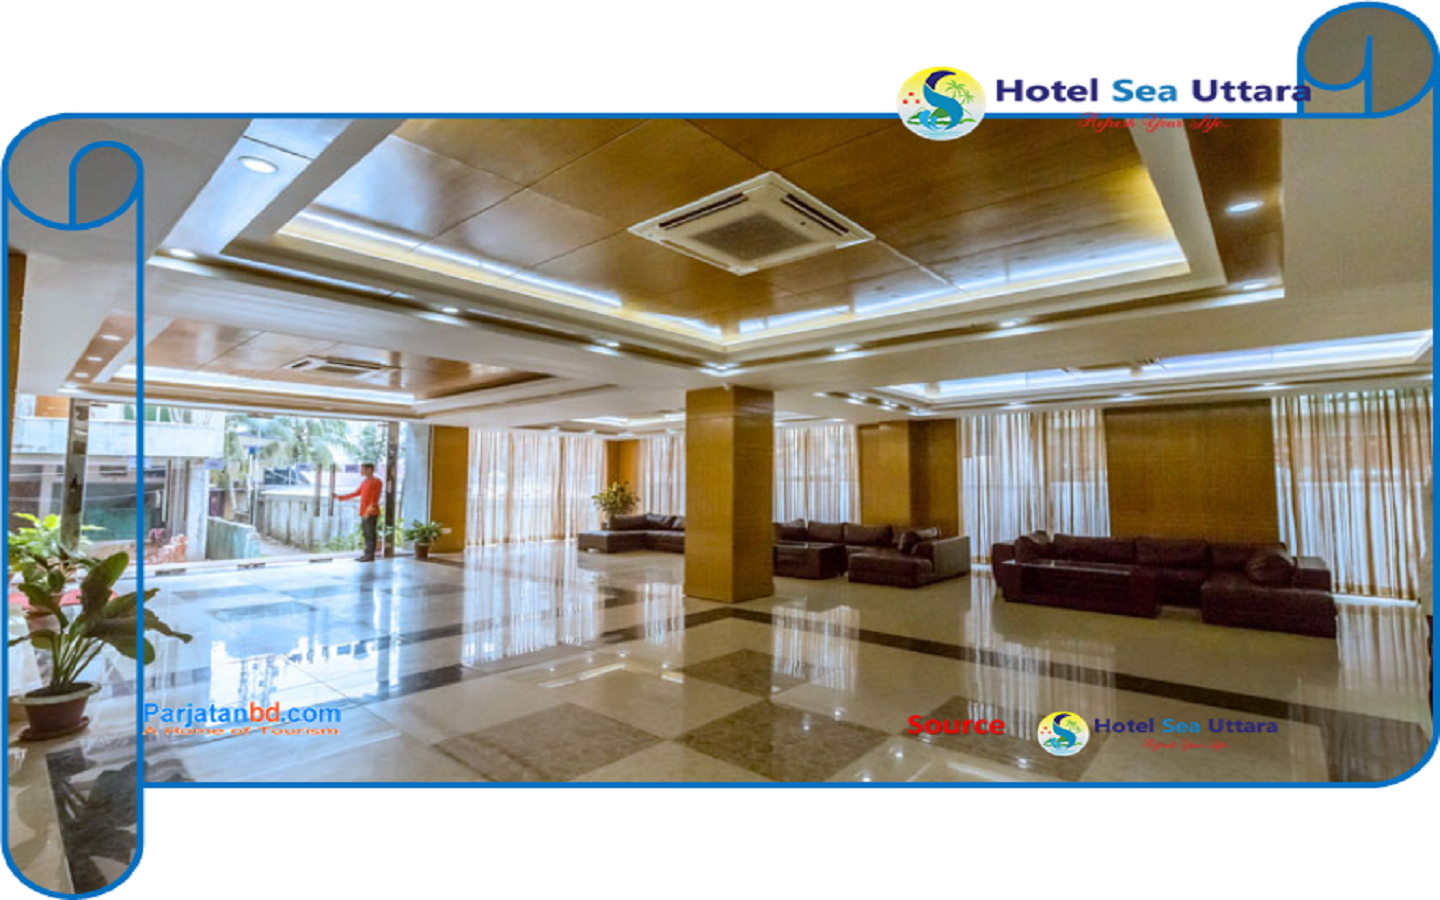 Hotel Sea Uttara Picture-1